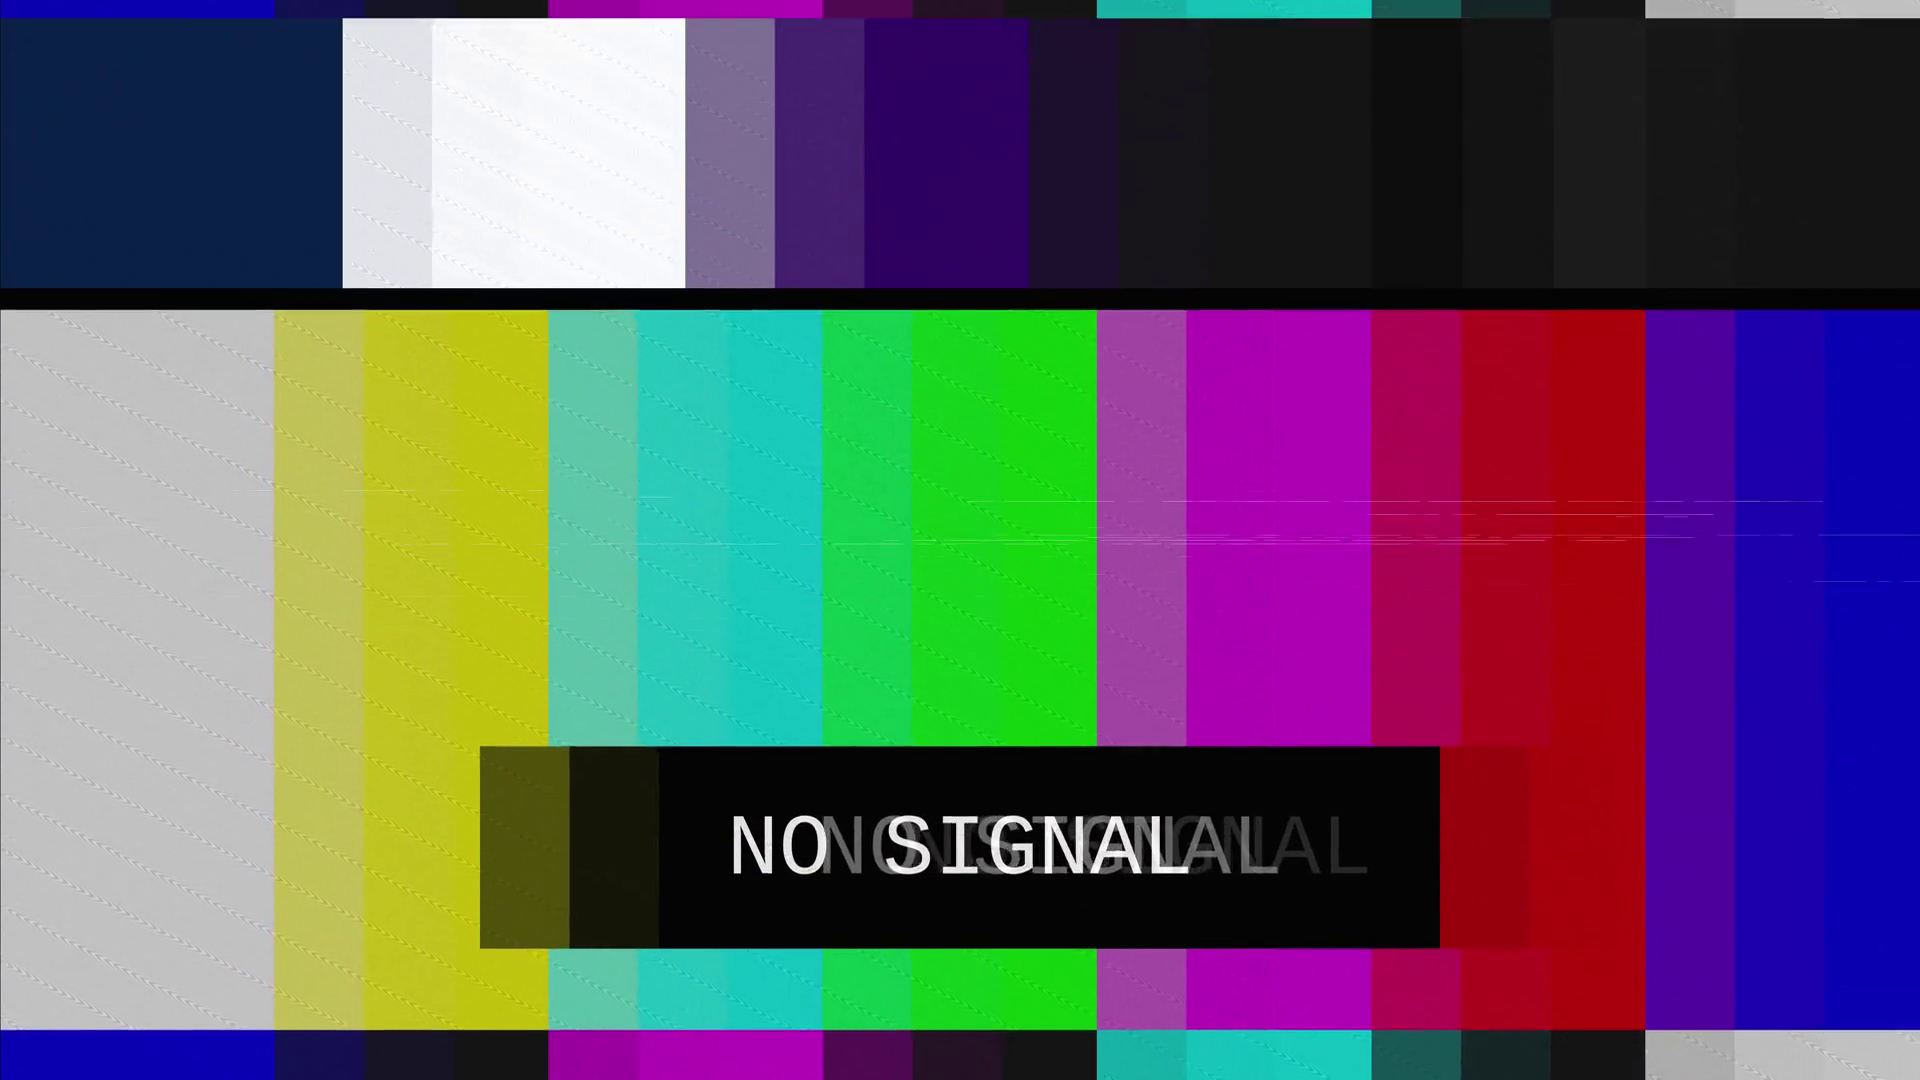 No Signal